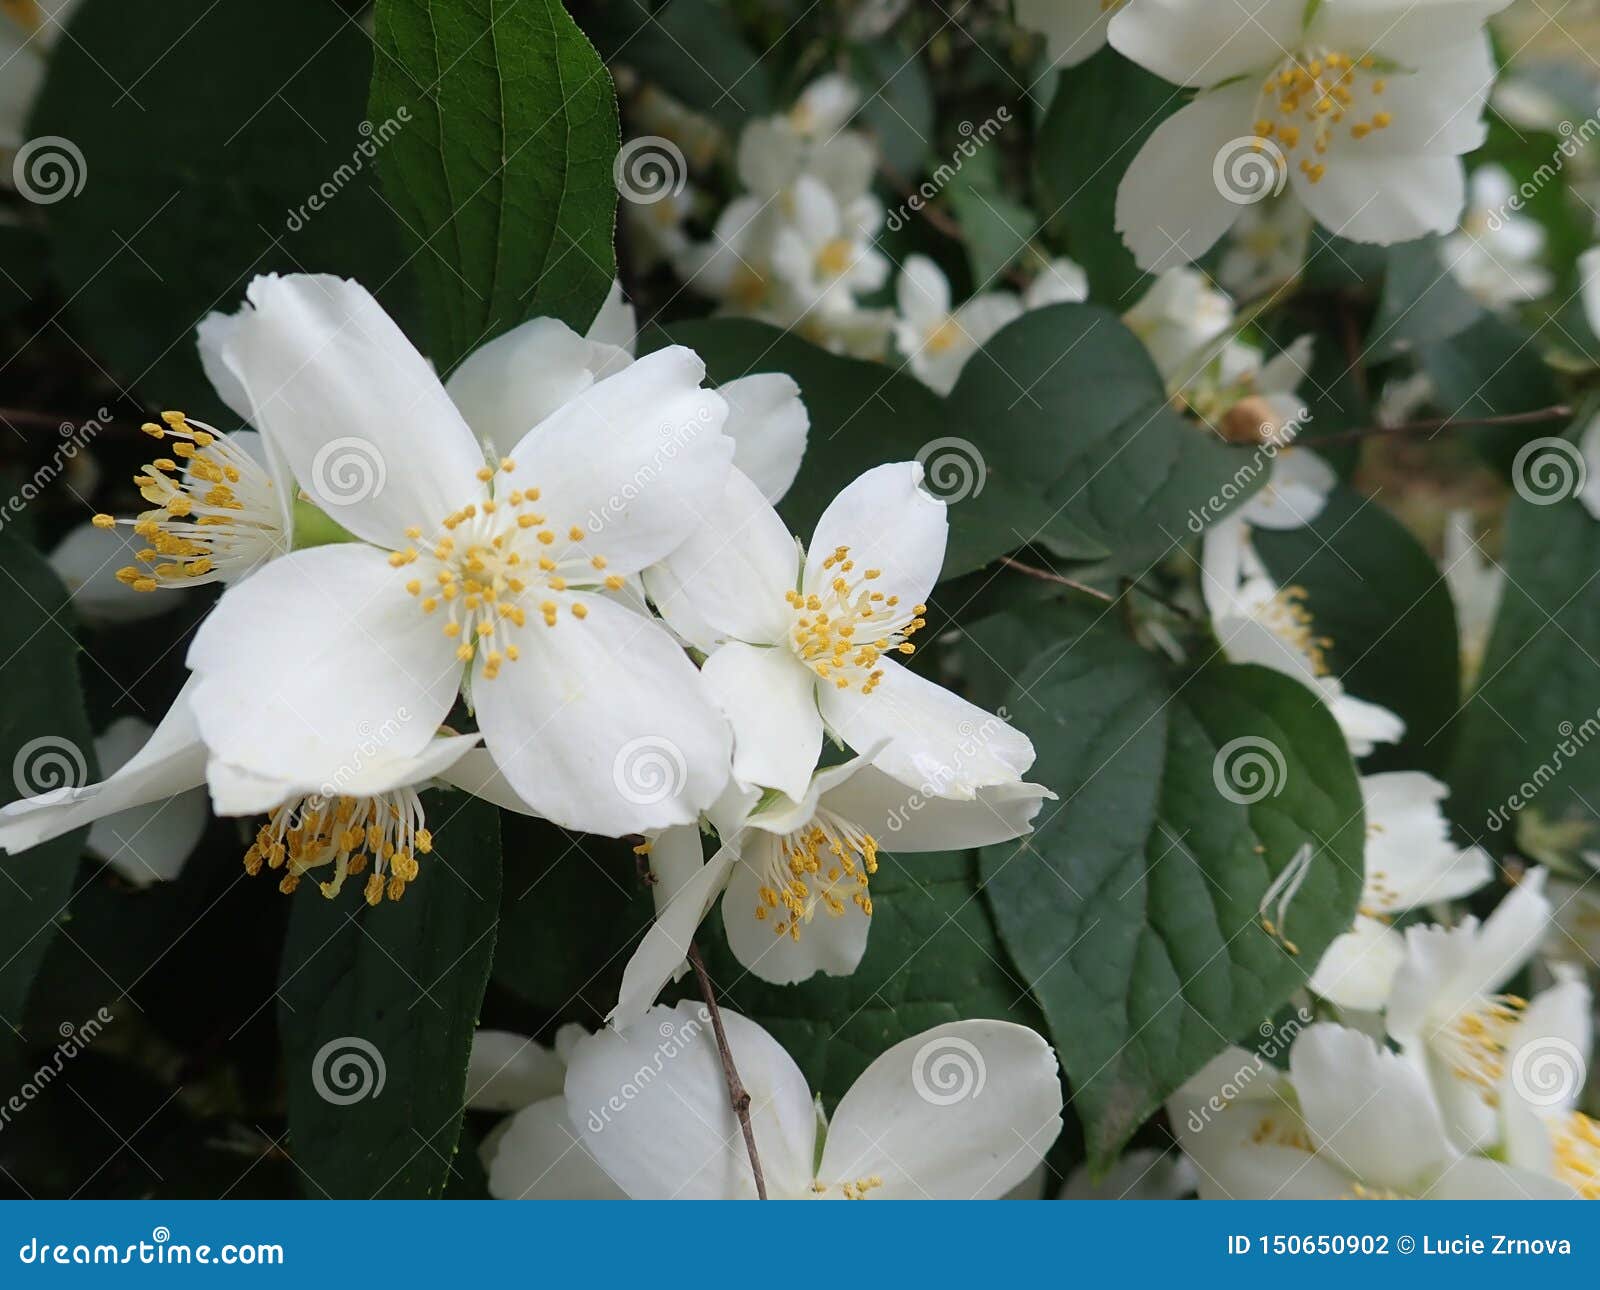 beautiful yasmine tree in a white blossom